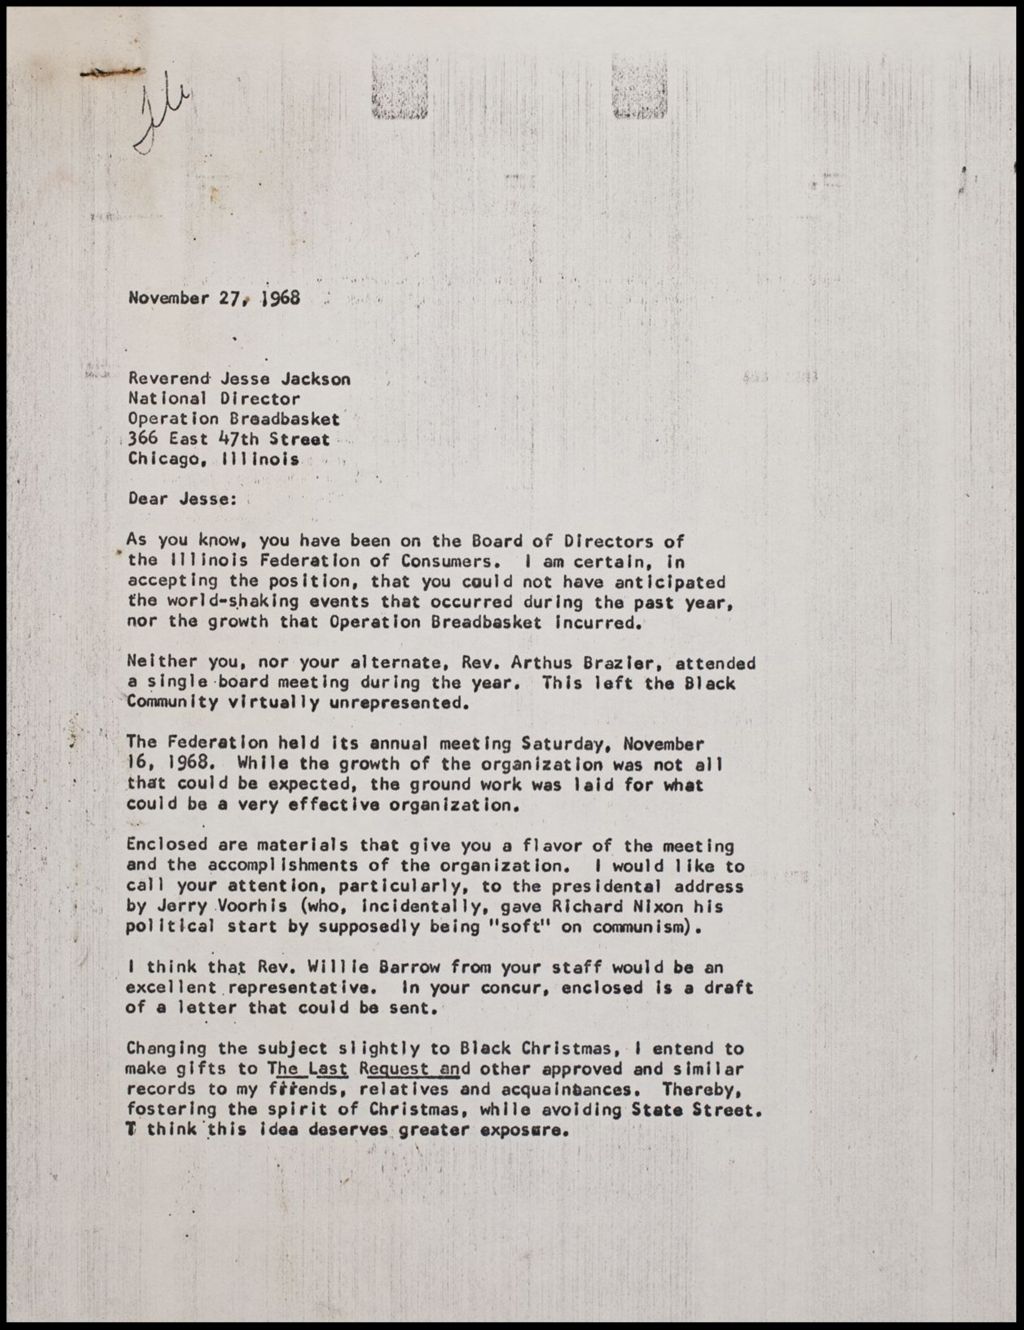 Miniature of Correspondence, 1968 (Folder II-150)